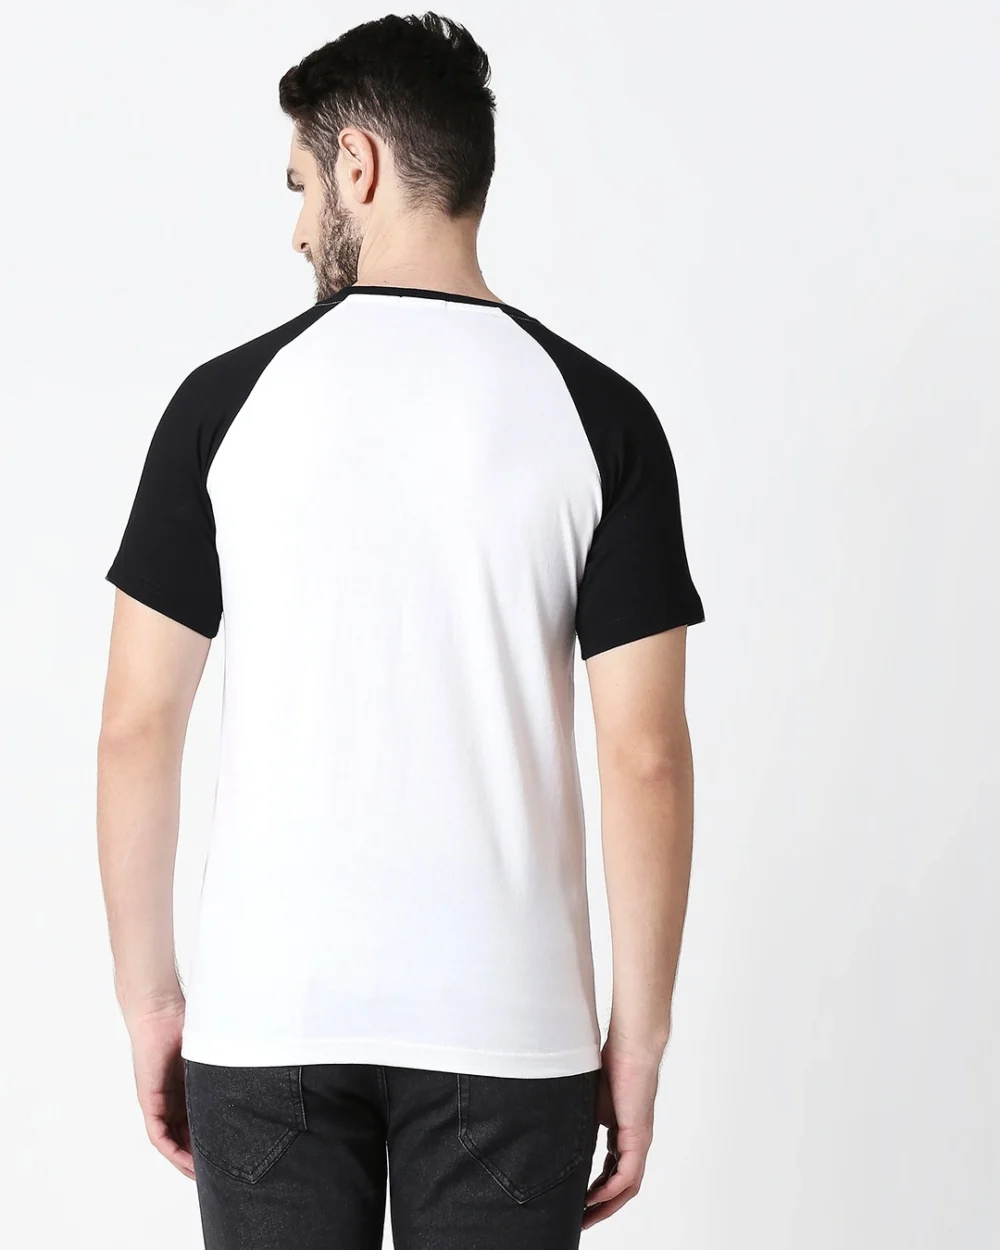 Men's White & Black Raglan Half Sleeve T-shirt